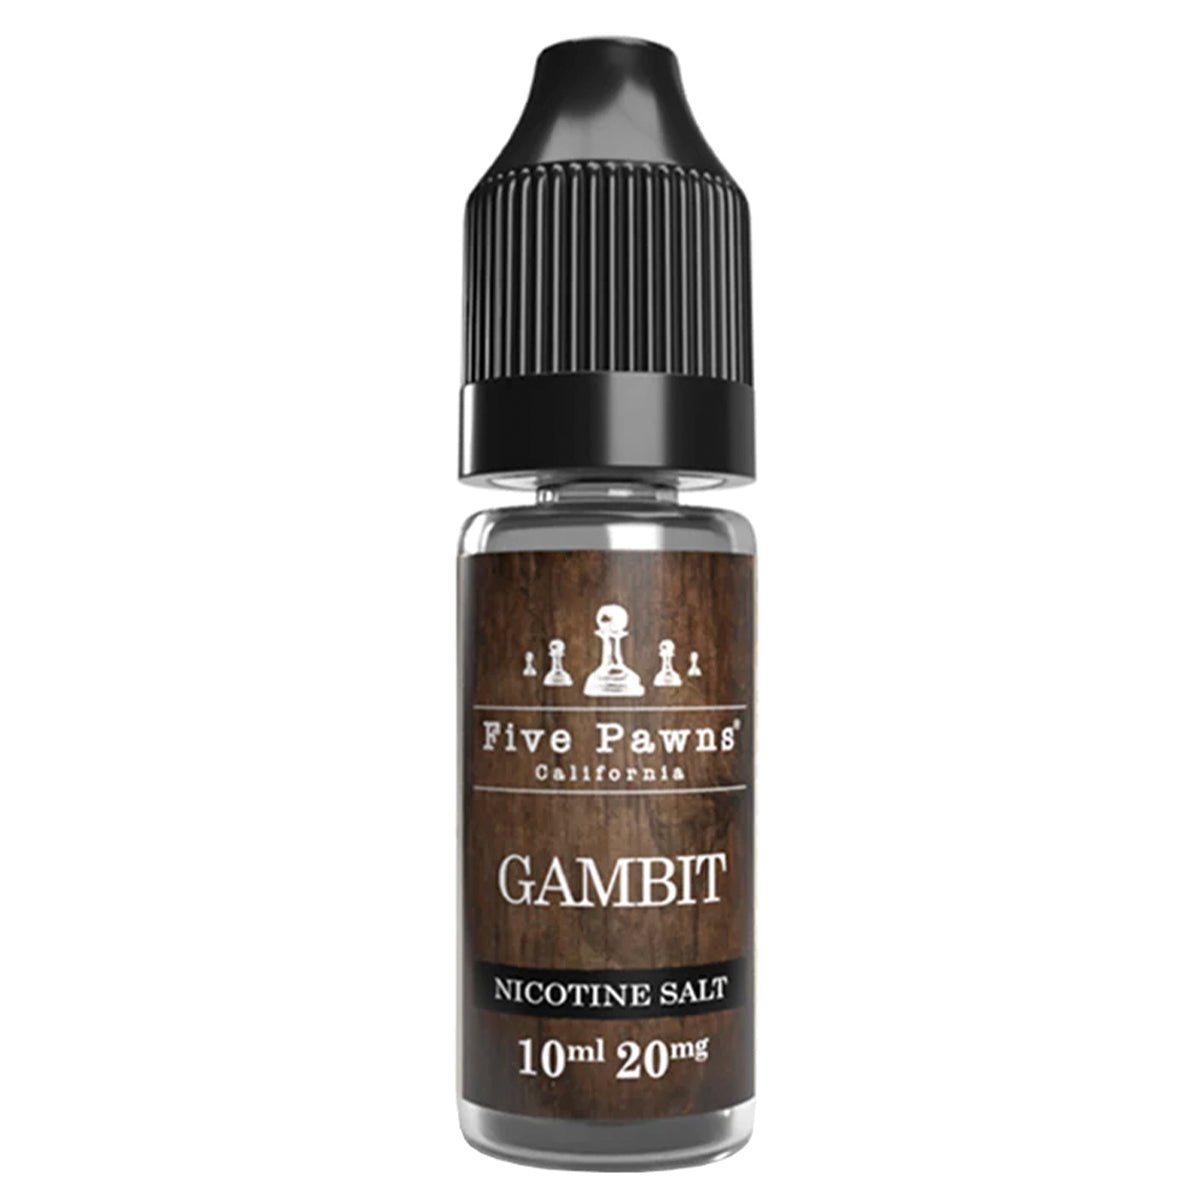 Gambit 10ml Nic Salt By Five Pawns - Manabush Eliquid - Tobacco E-liquid and Vape Juice